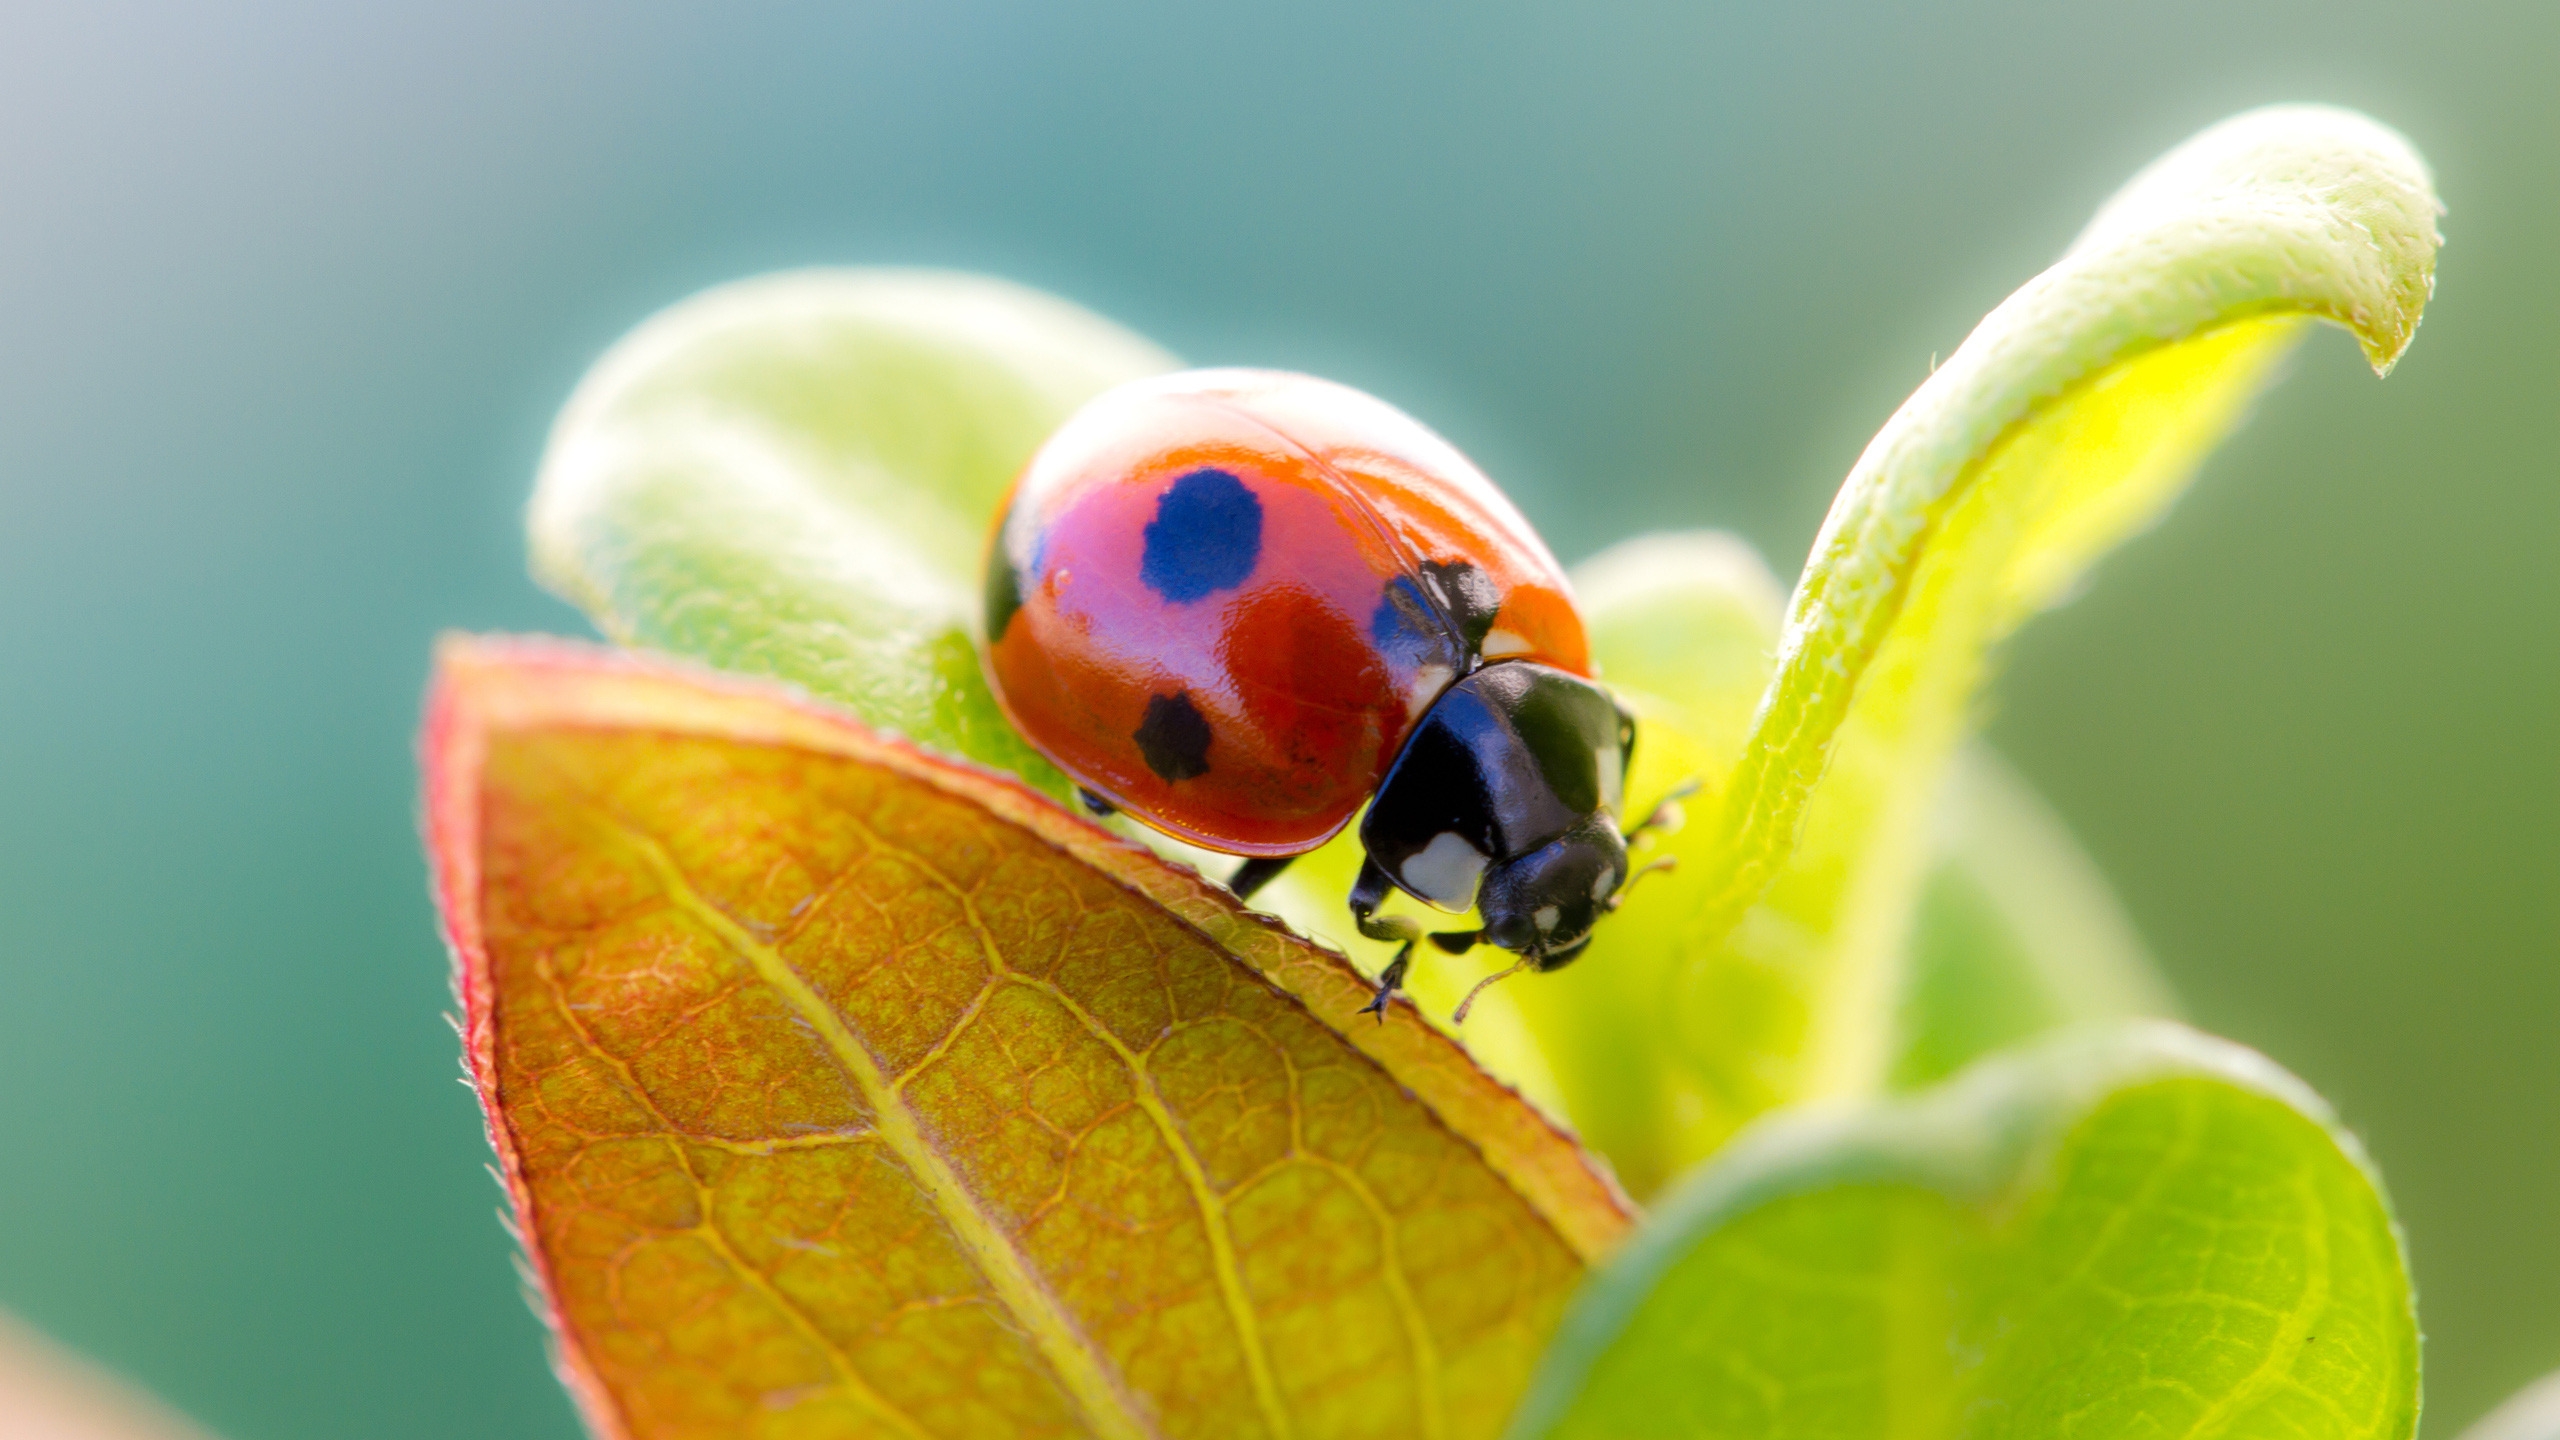 Ladybug Cute for 2560x1440 HDTV resolution